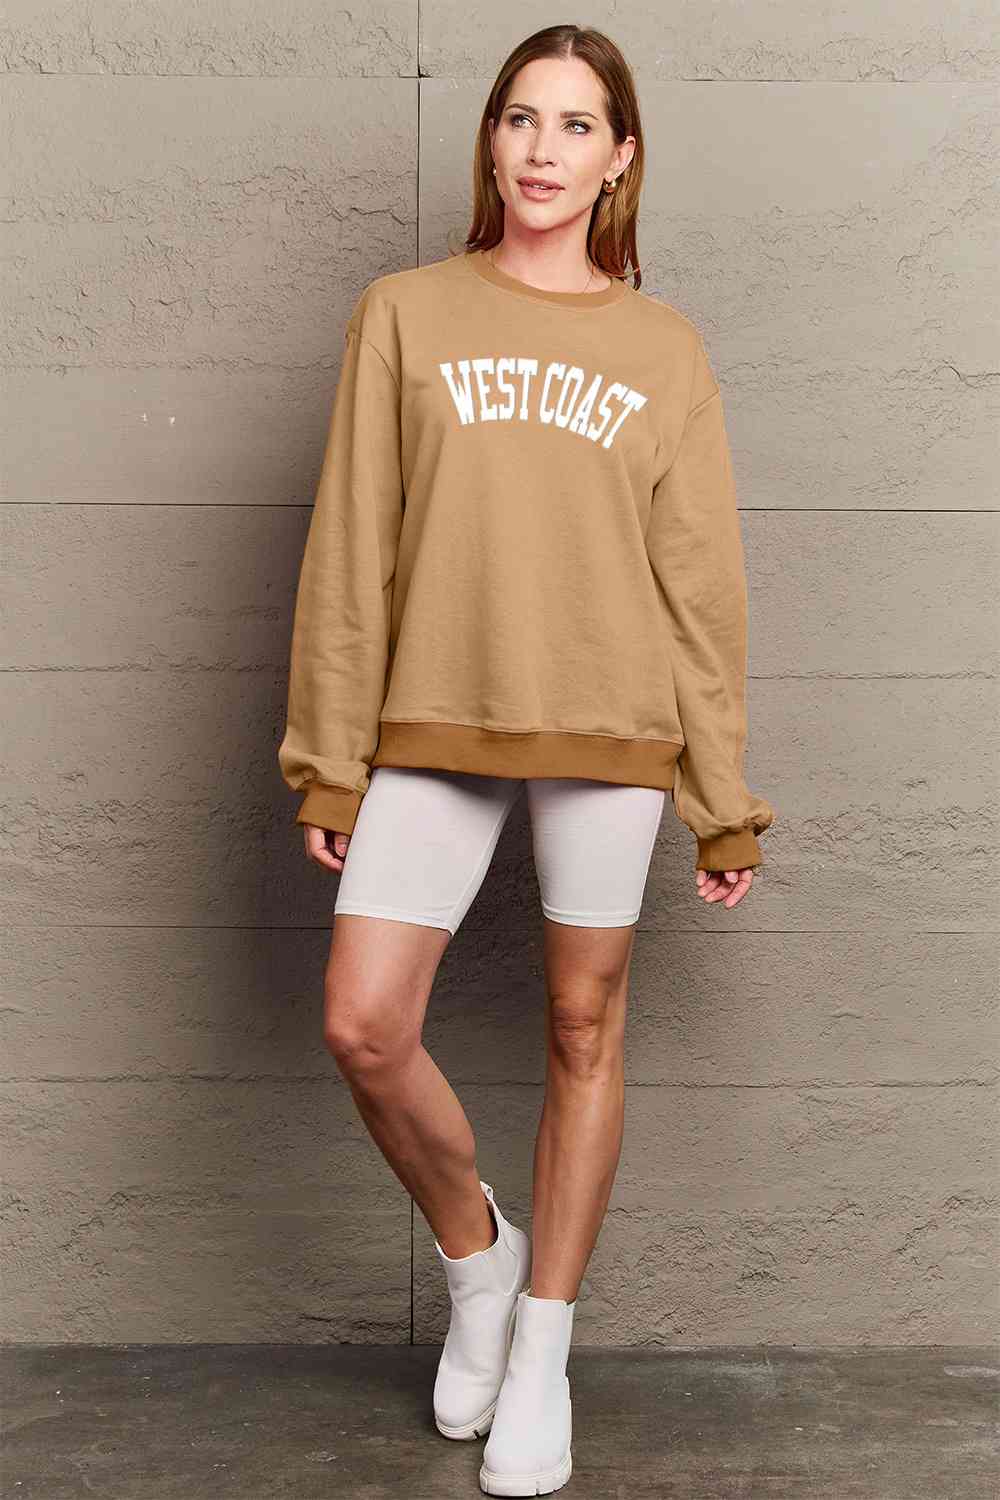 WEST COAST Graphic Long Sleeve Sweatshirt